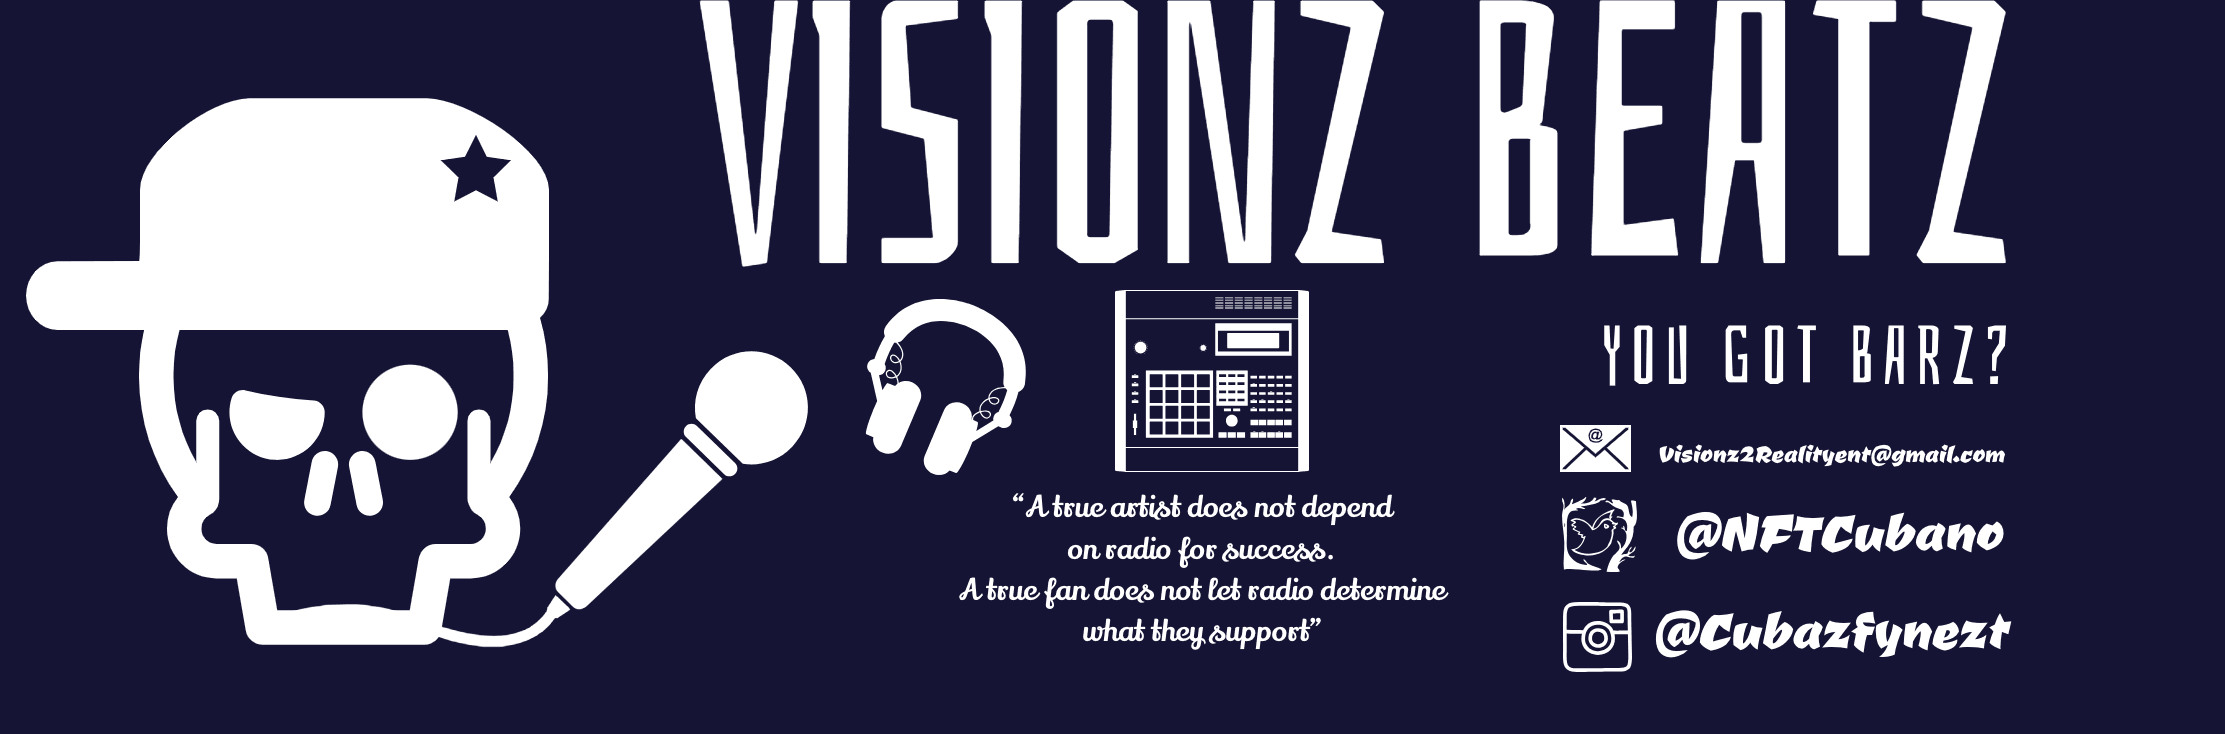 VisionzBeatz 横幅